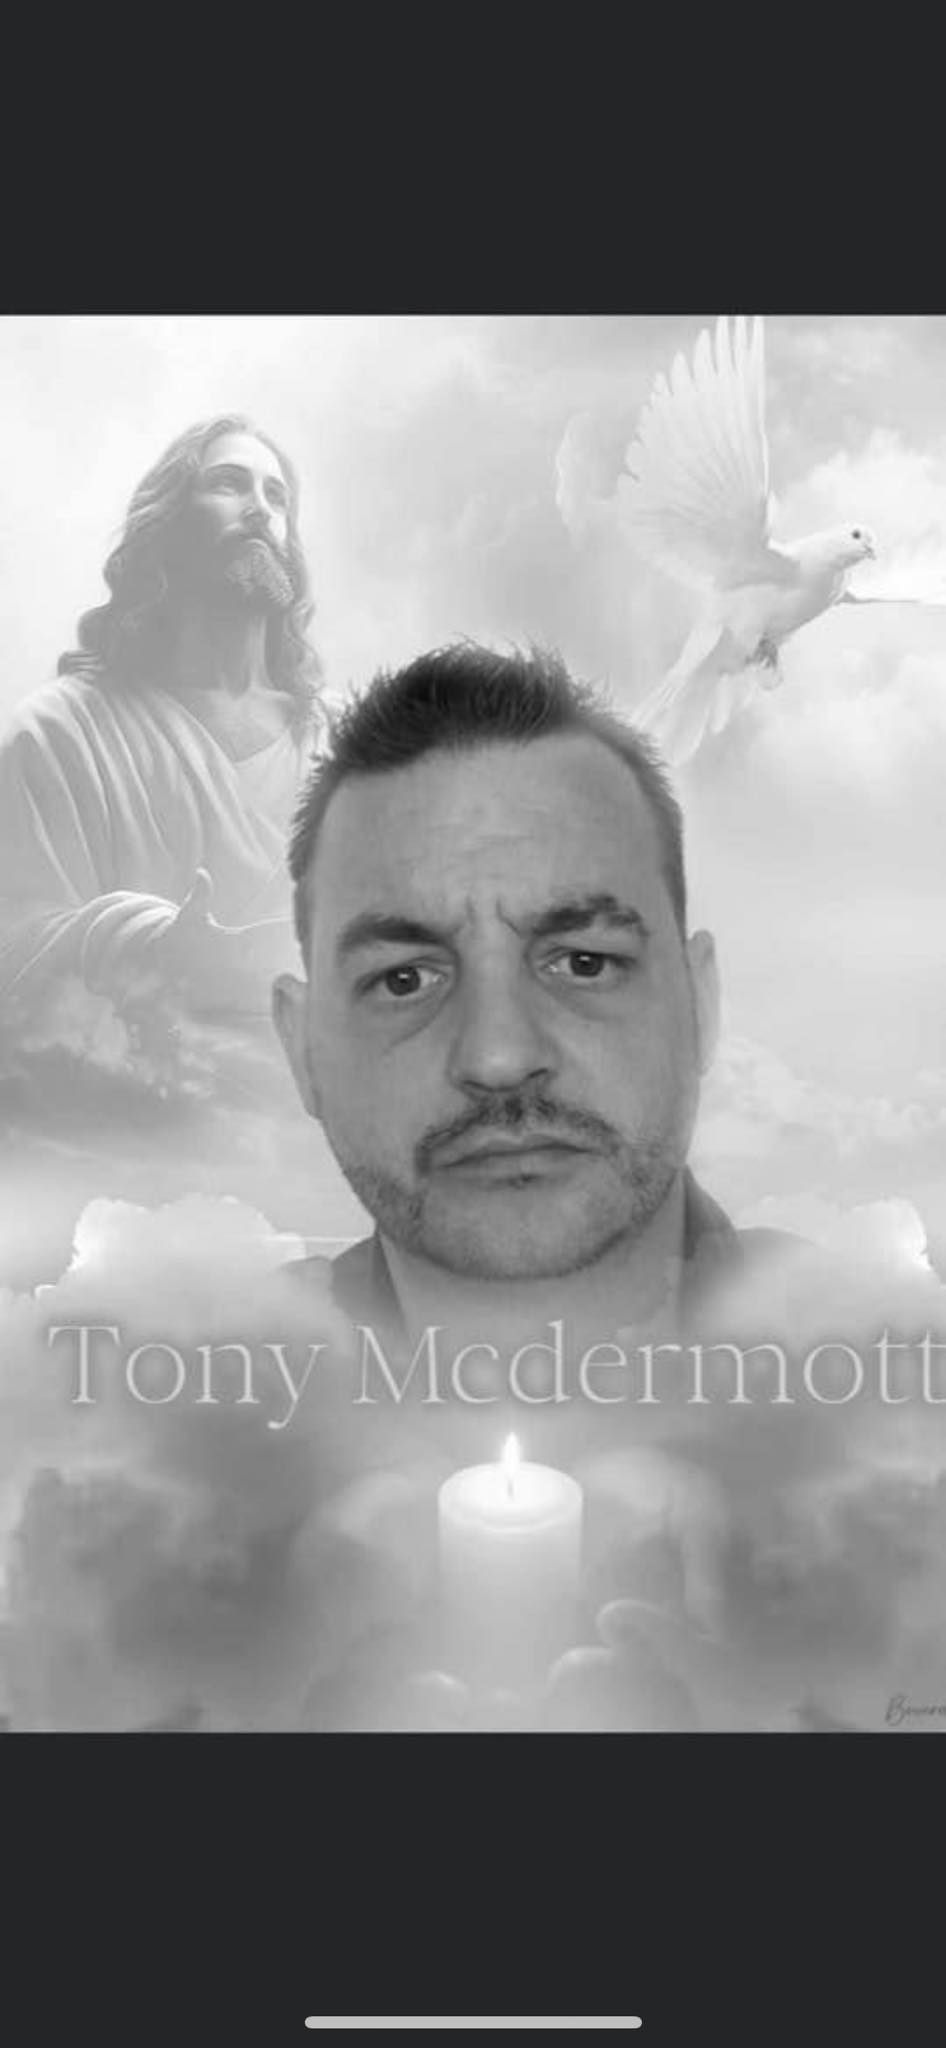 In Loving Memory of Tony McDermott: A Bright Soul Gone Too Soon